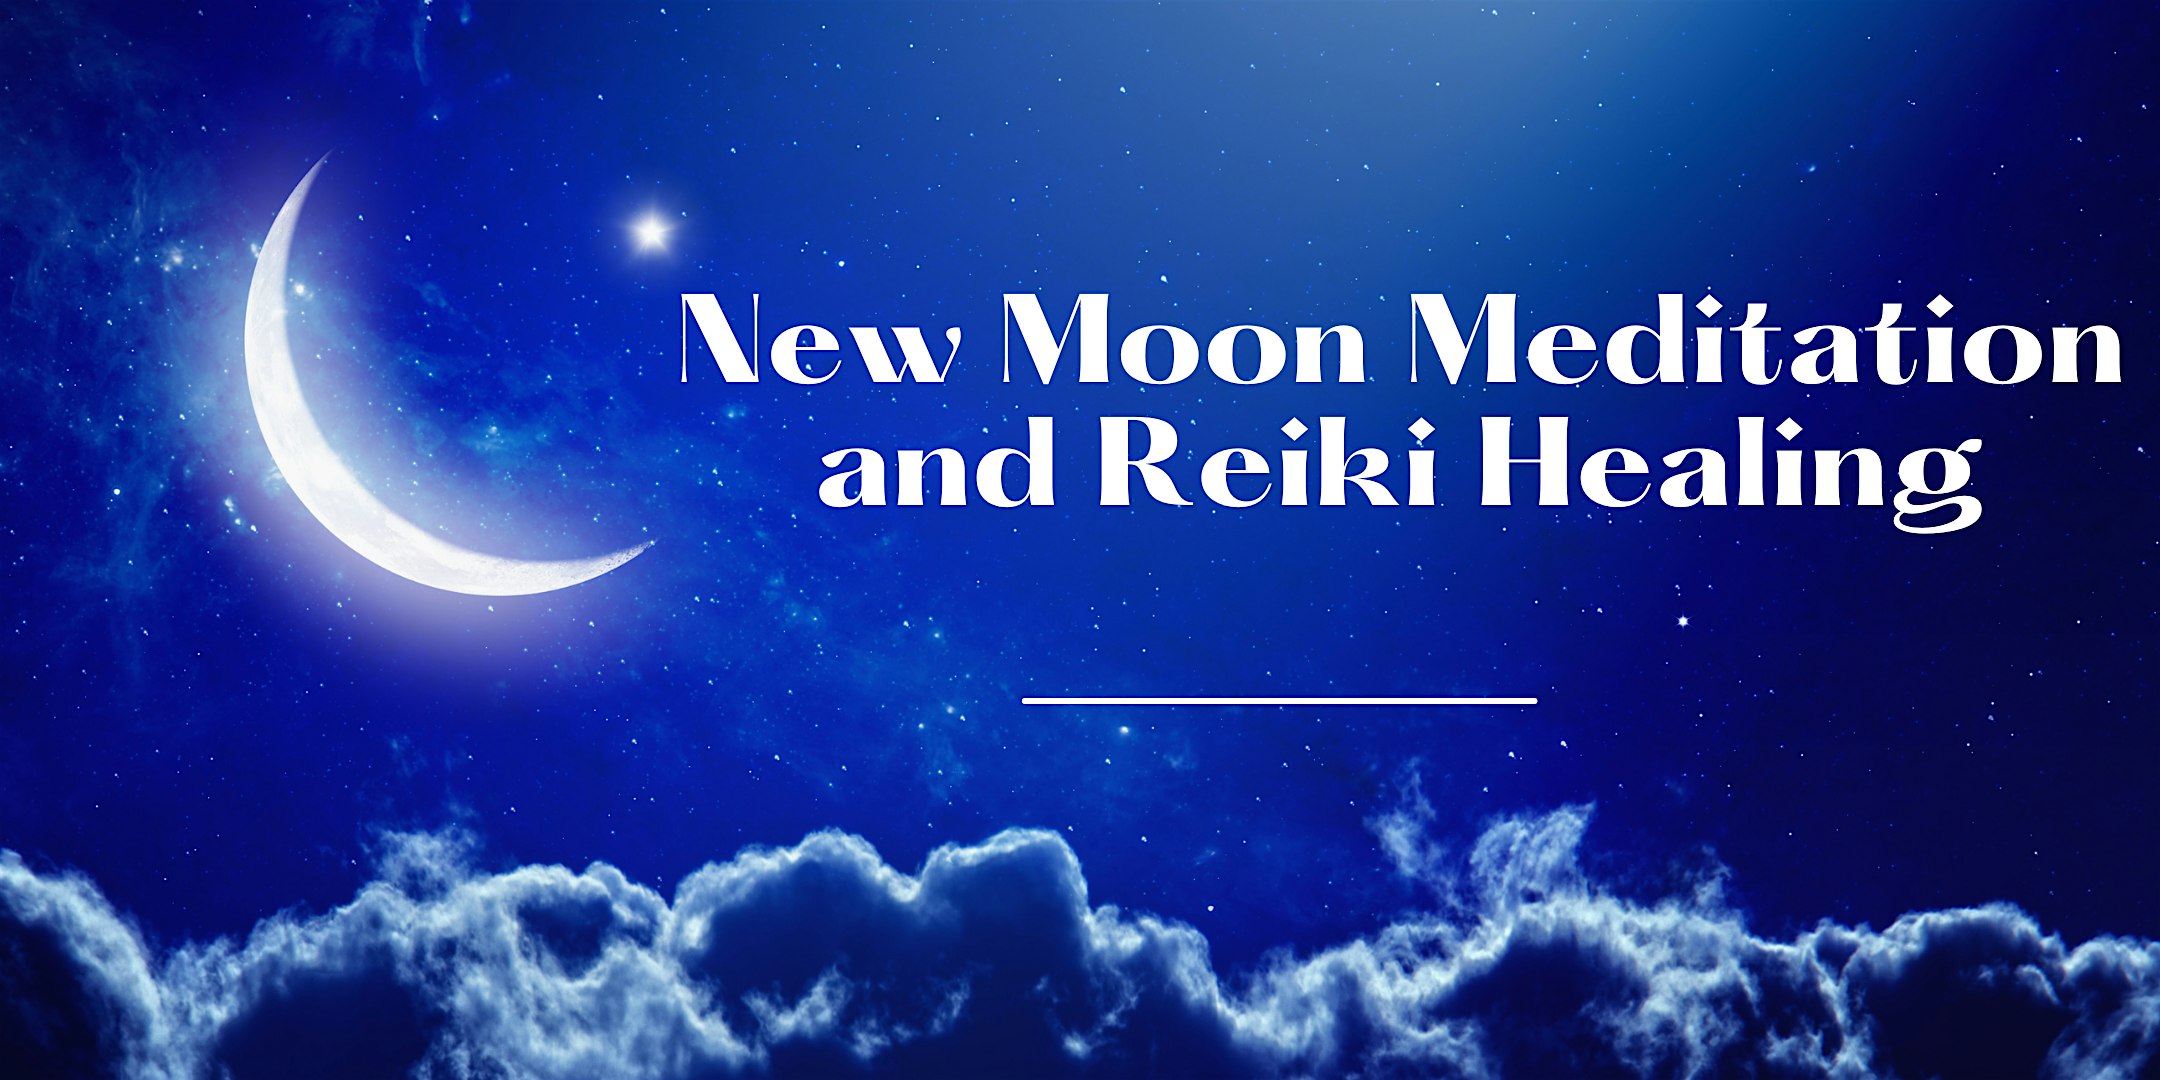 New Moon Meditation and Reiki Healing - July